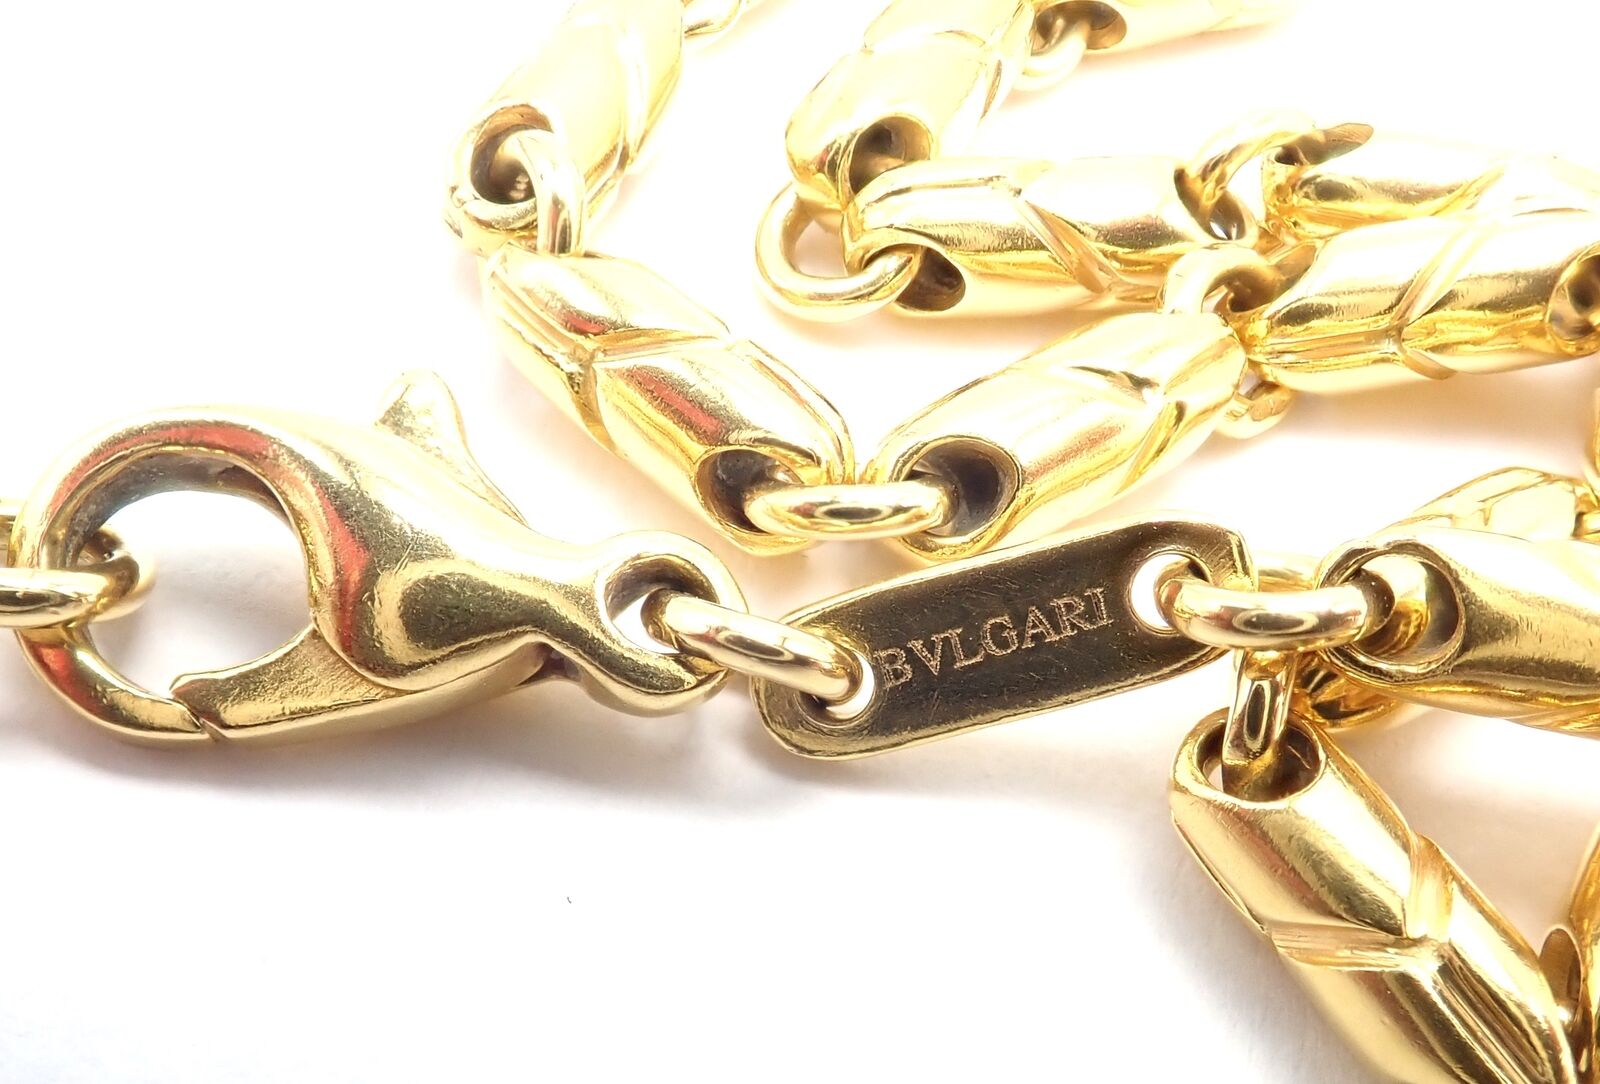 Bvlgari Jewelry & Watches:Fine Jewelry:Necklaces & Pendants Authentic! Bvlgari Bulgari Passodopio 18k Yellow Gold 20.75" Link Chain Necklace